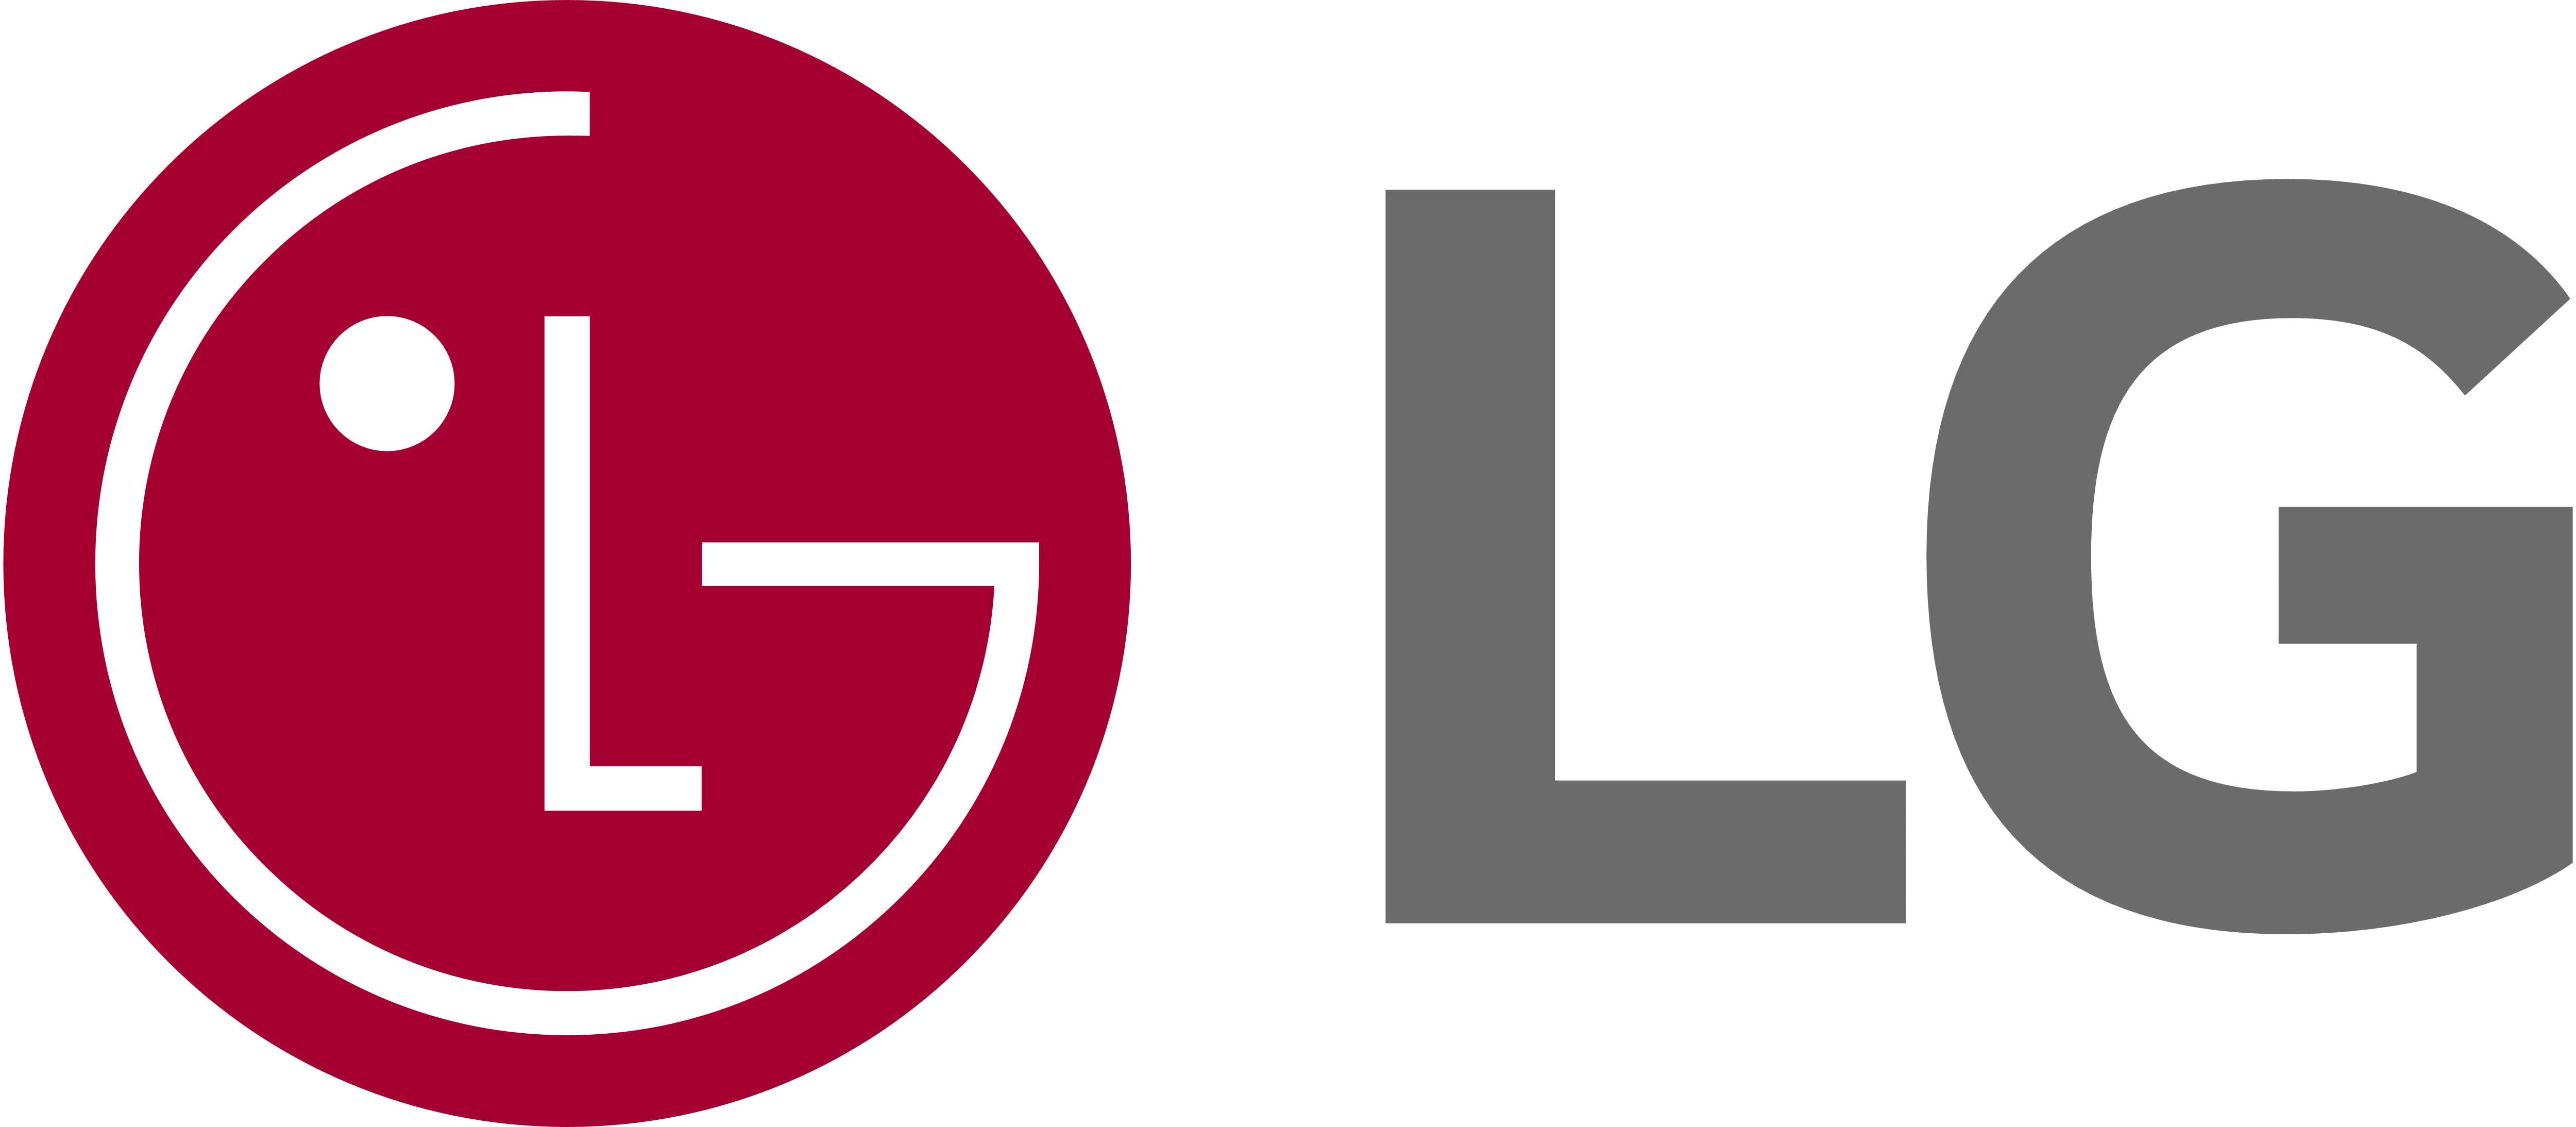 LG Stove Appliance Repair, Whirlpool Stove Maintenance